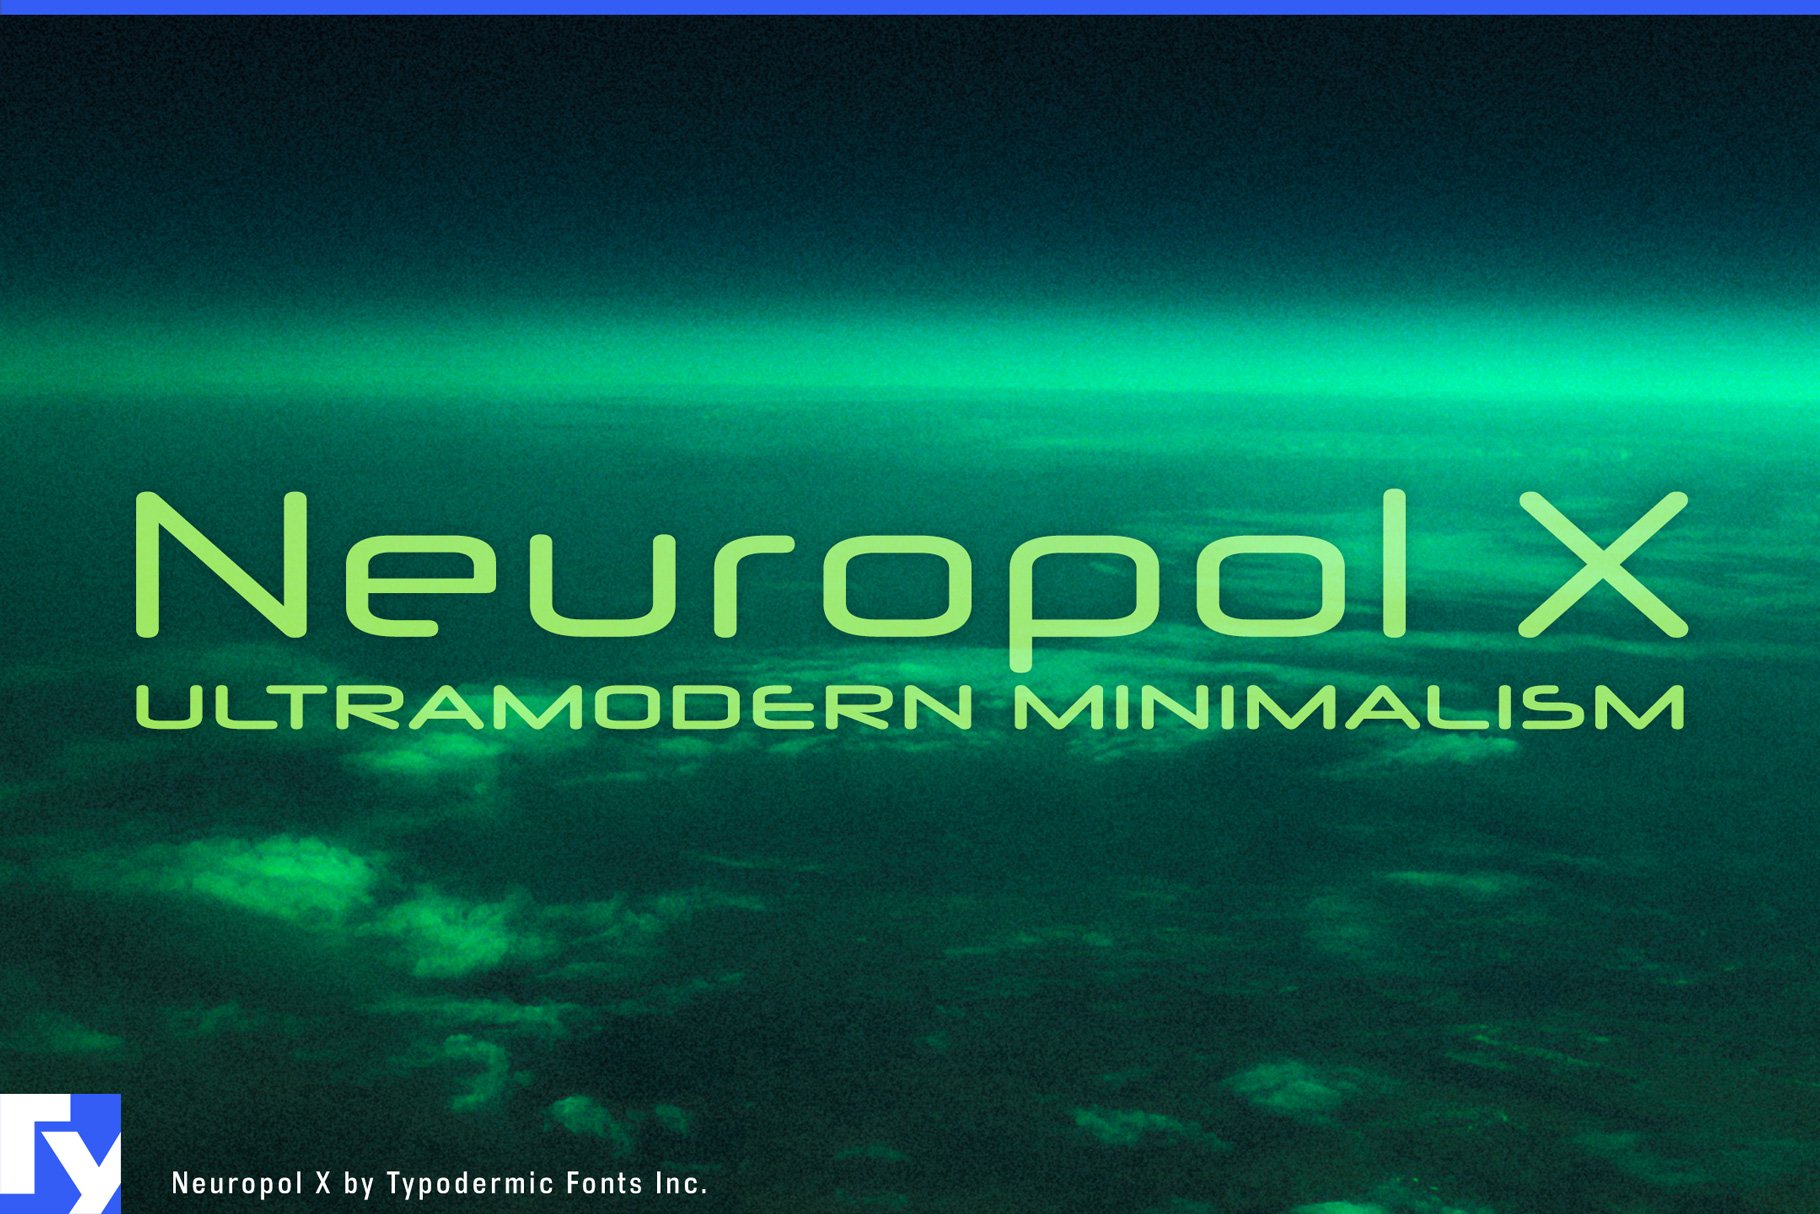 Neuropol X cover image.